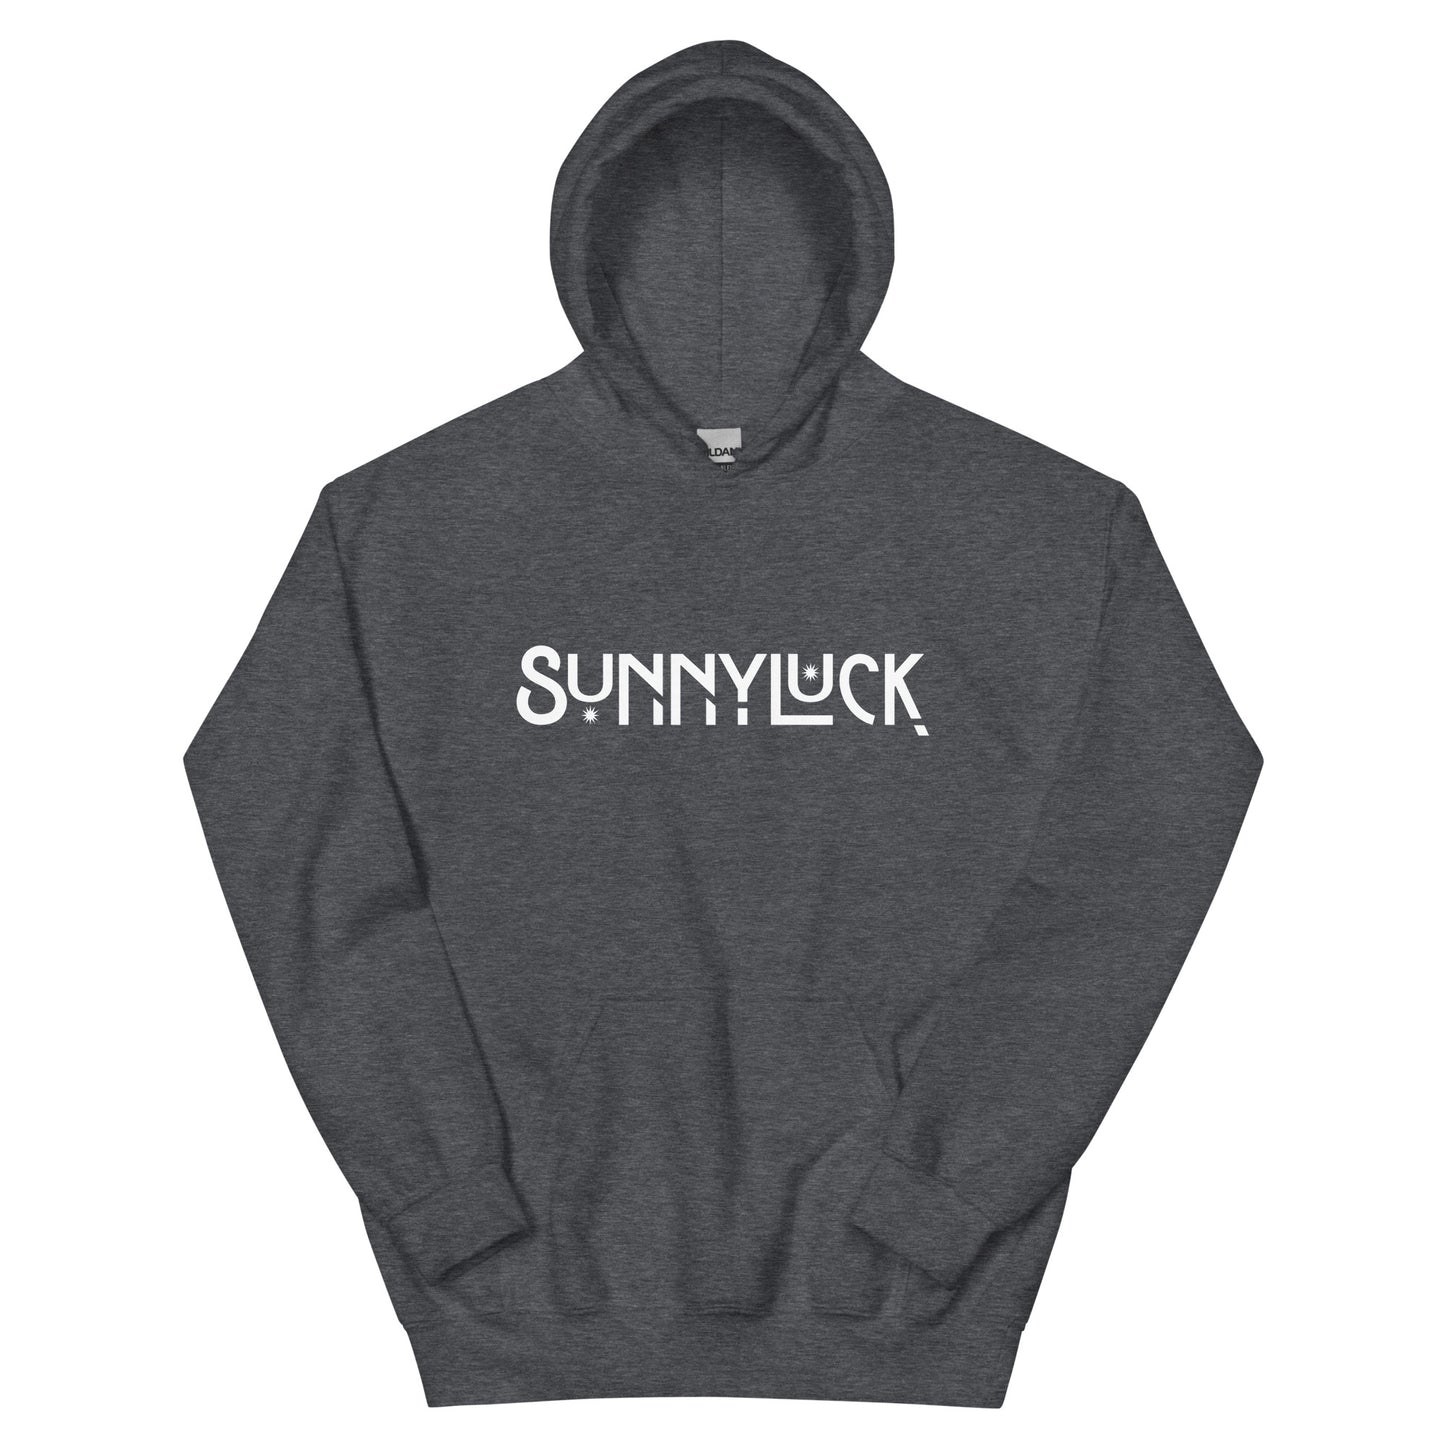 The SunnyLuck Hoodie